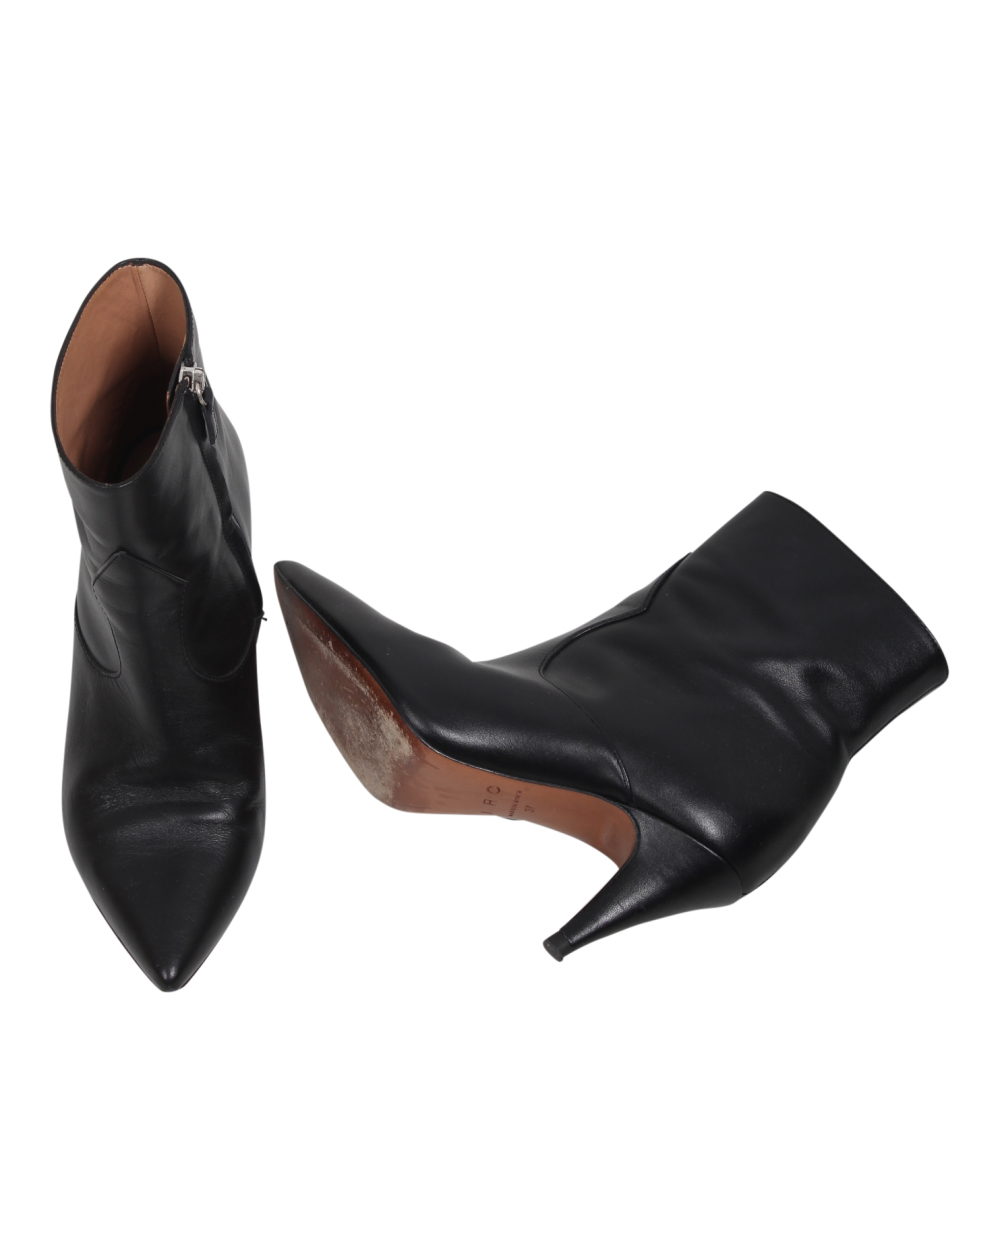 Iro leather boots, $160